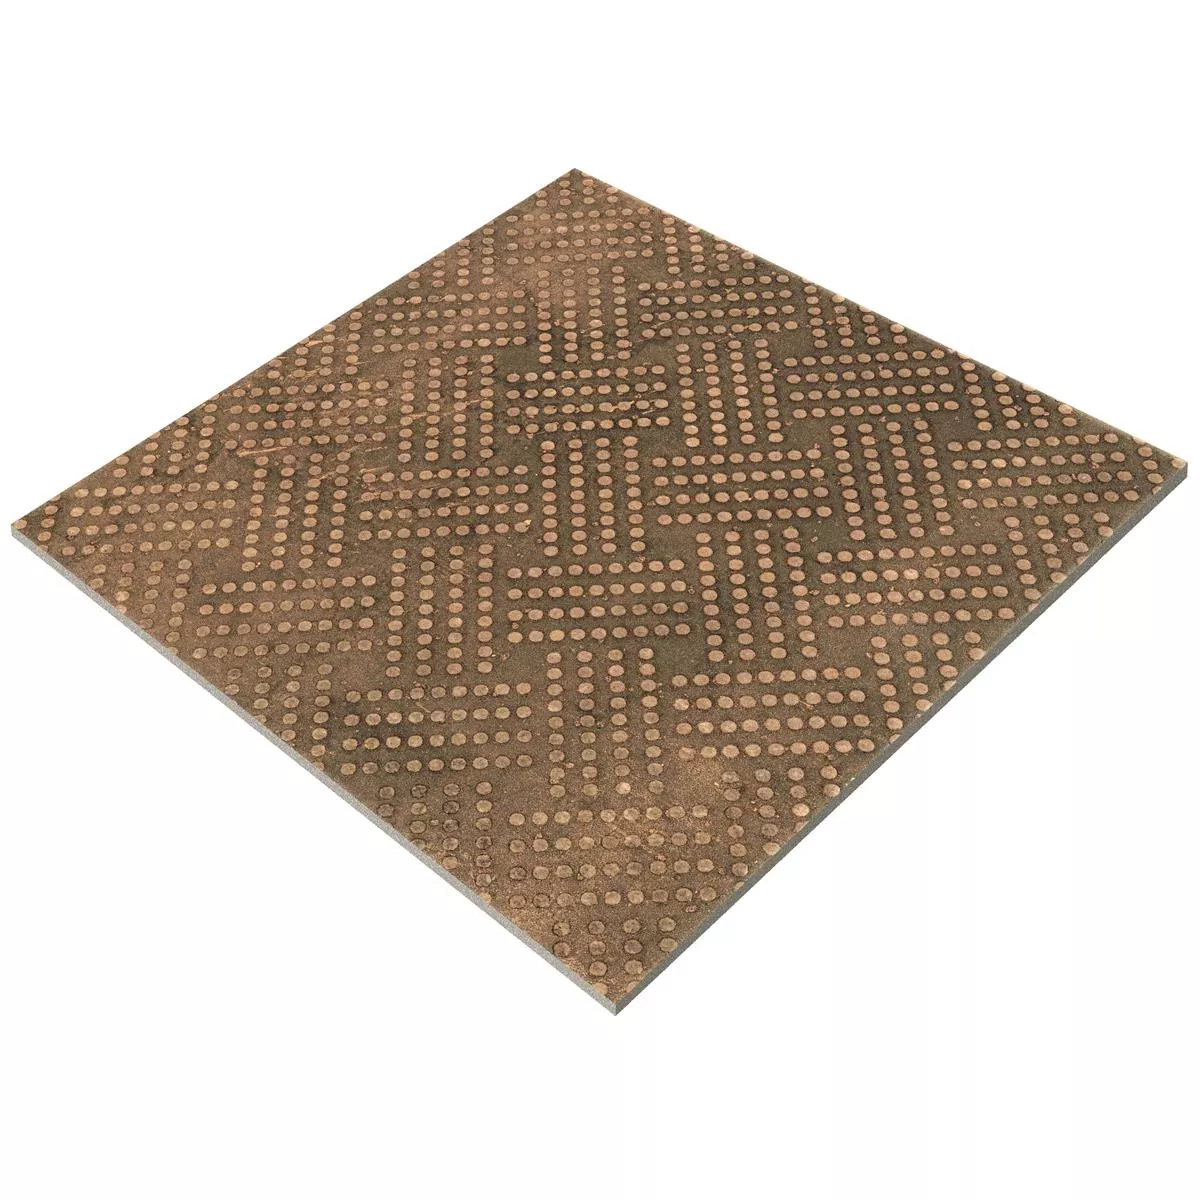 Podlahové Dlaždice Chicago Kovový Vzhled Bronzová R9 - 18,5x18,5cm - 1